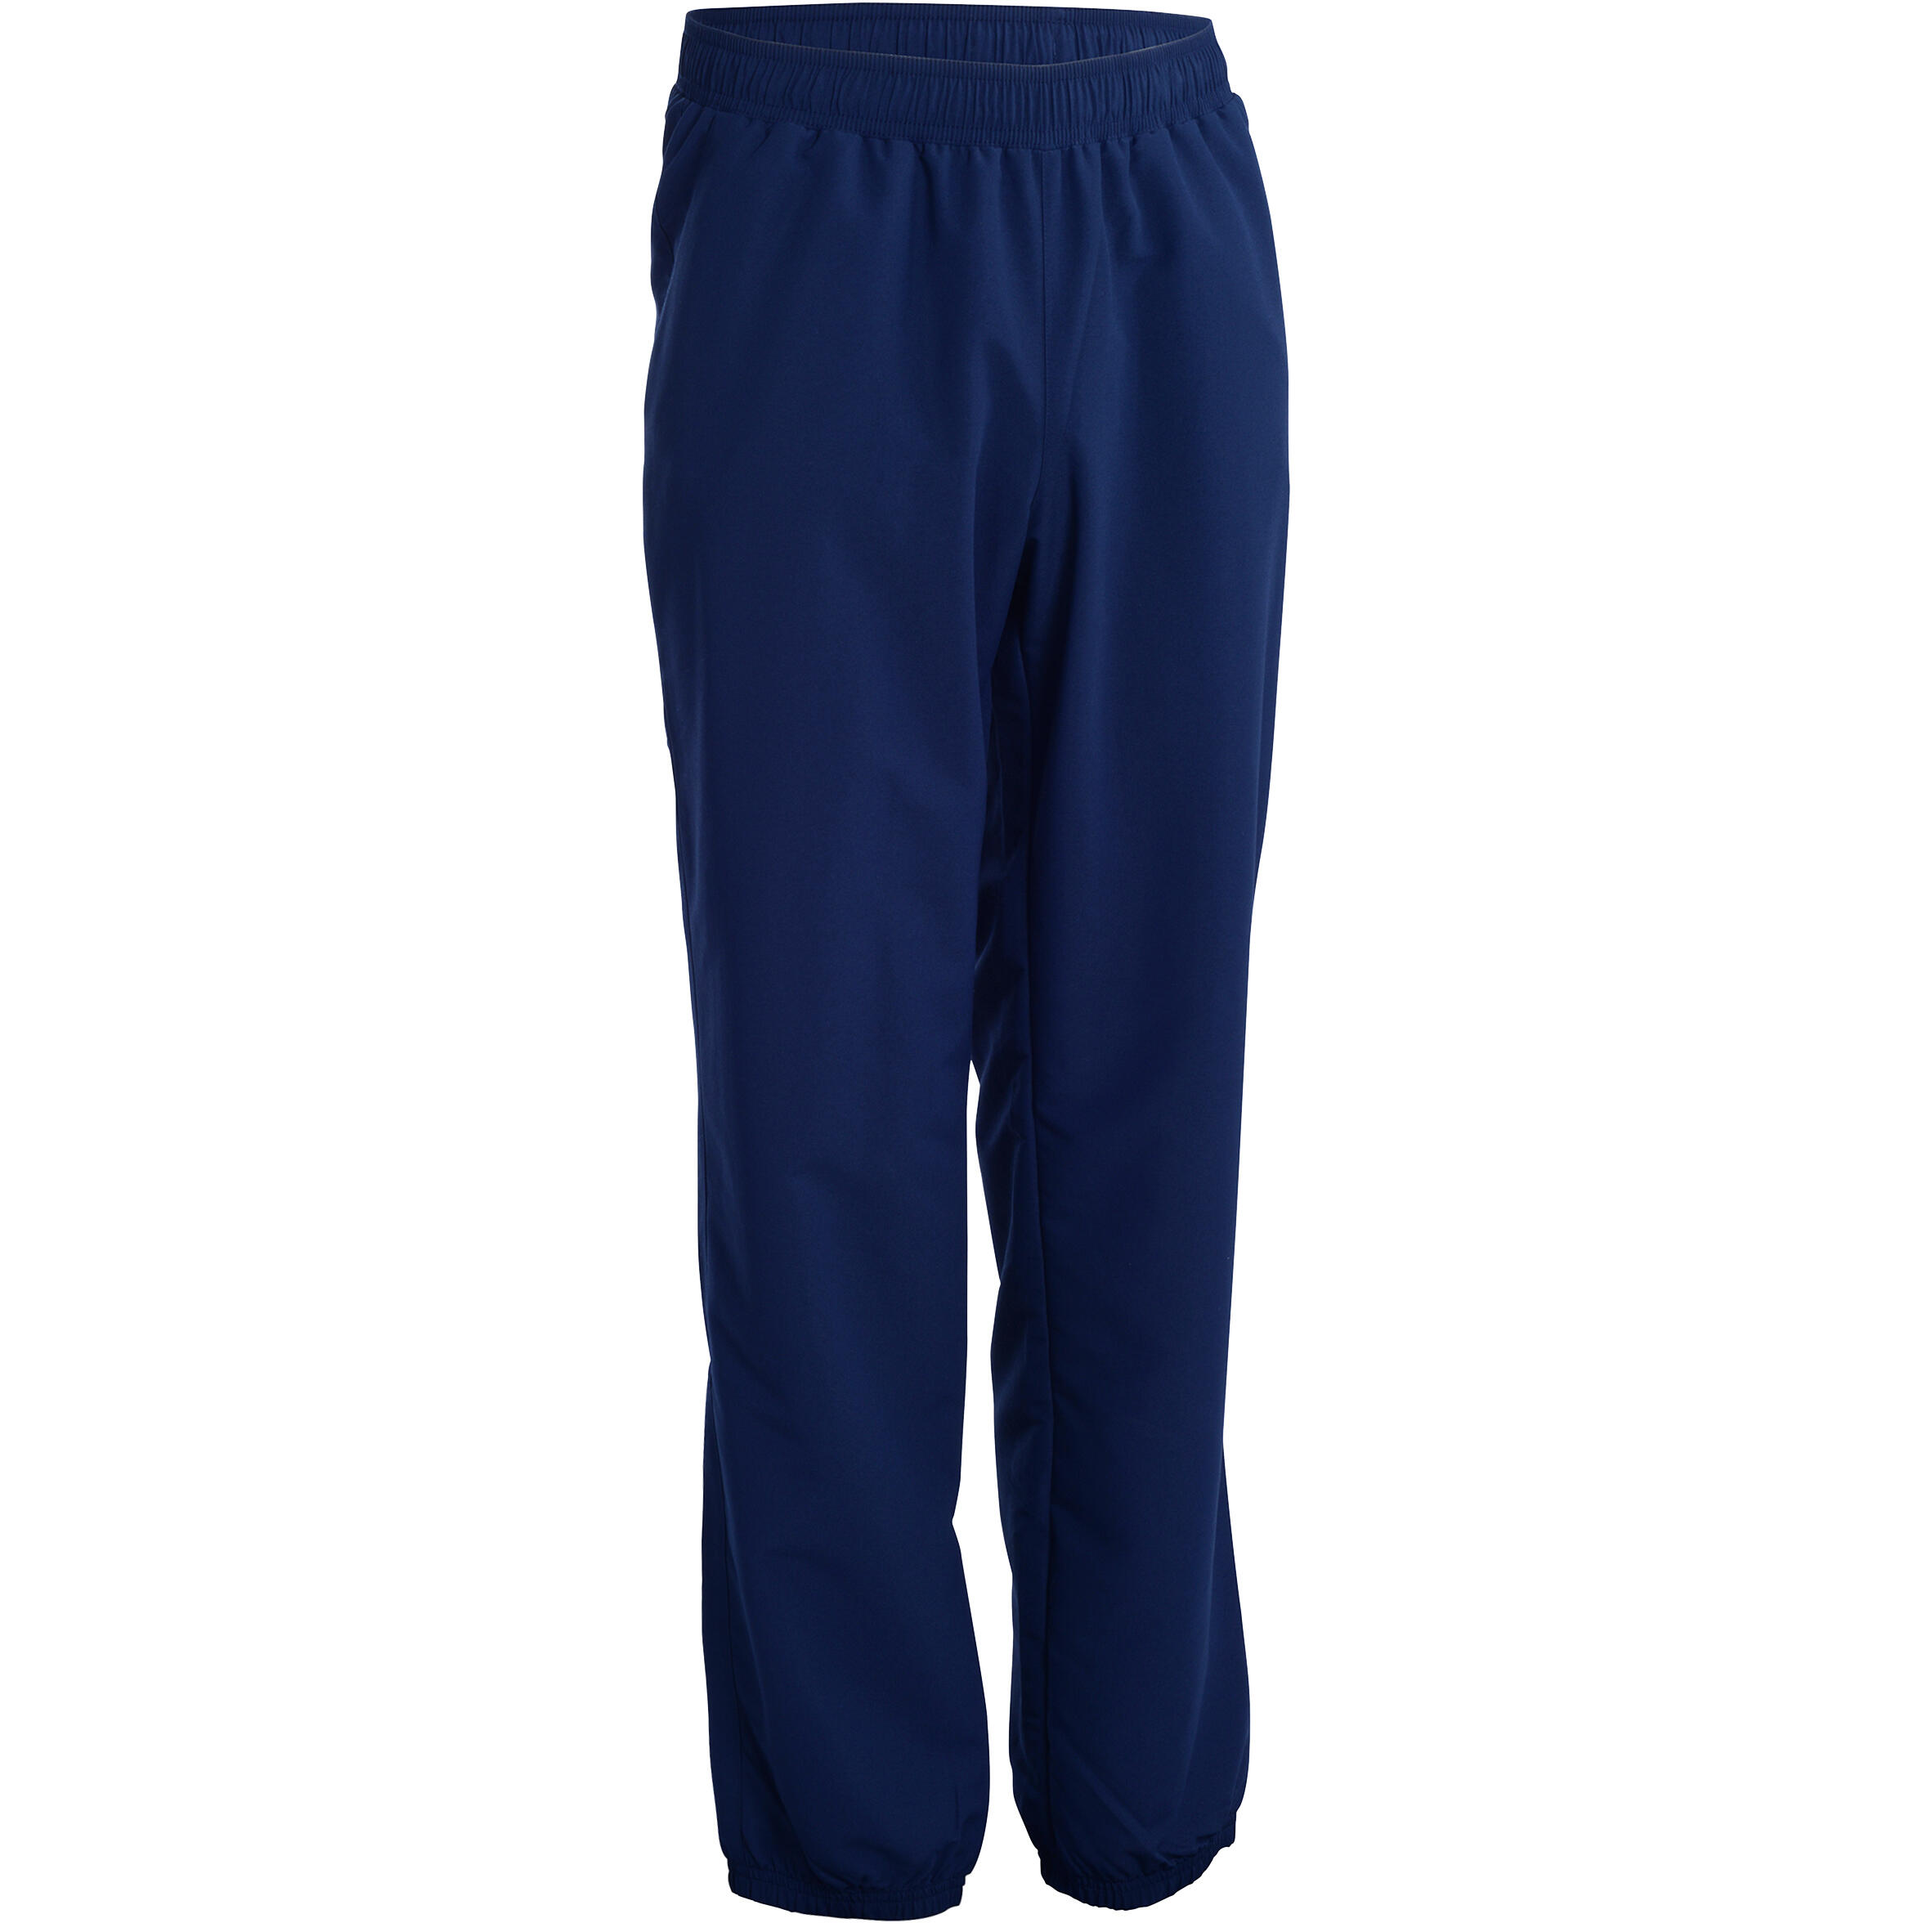 Oneway Men Casual Wear Blue Track Pants  Blue  171488